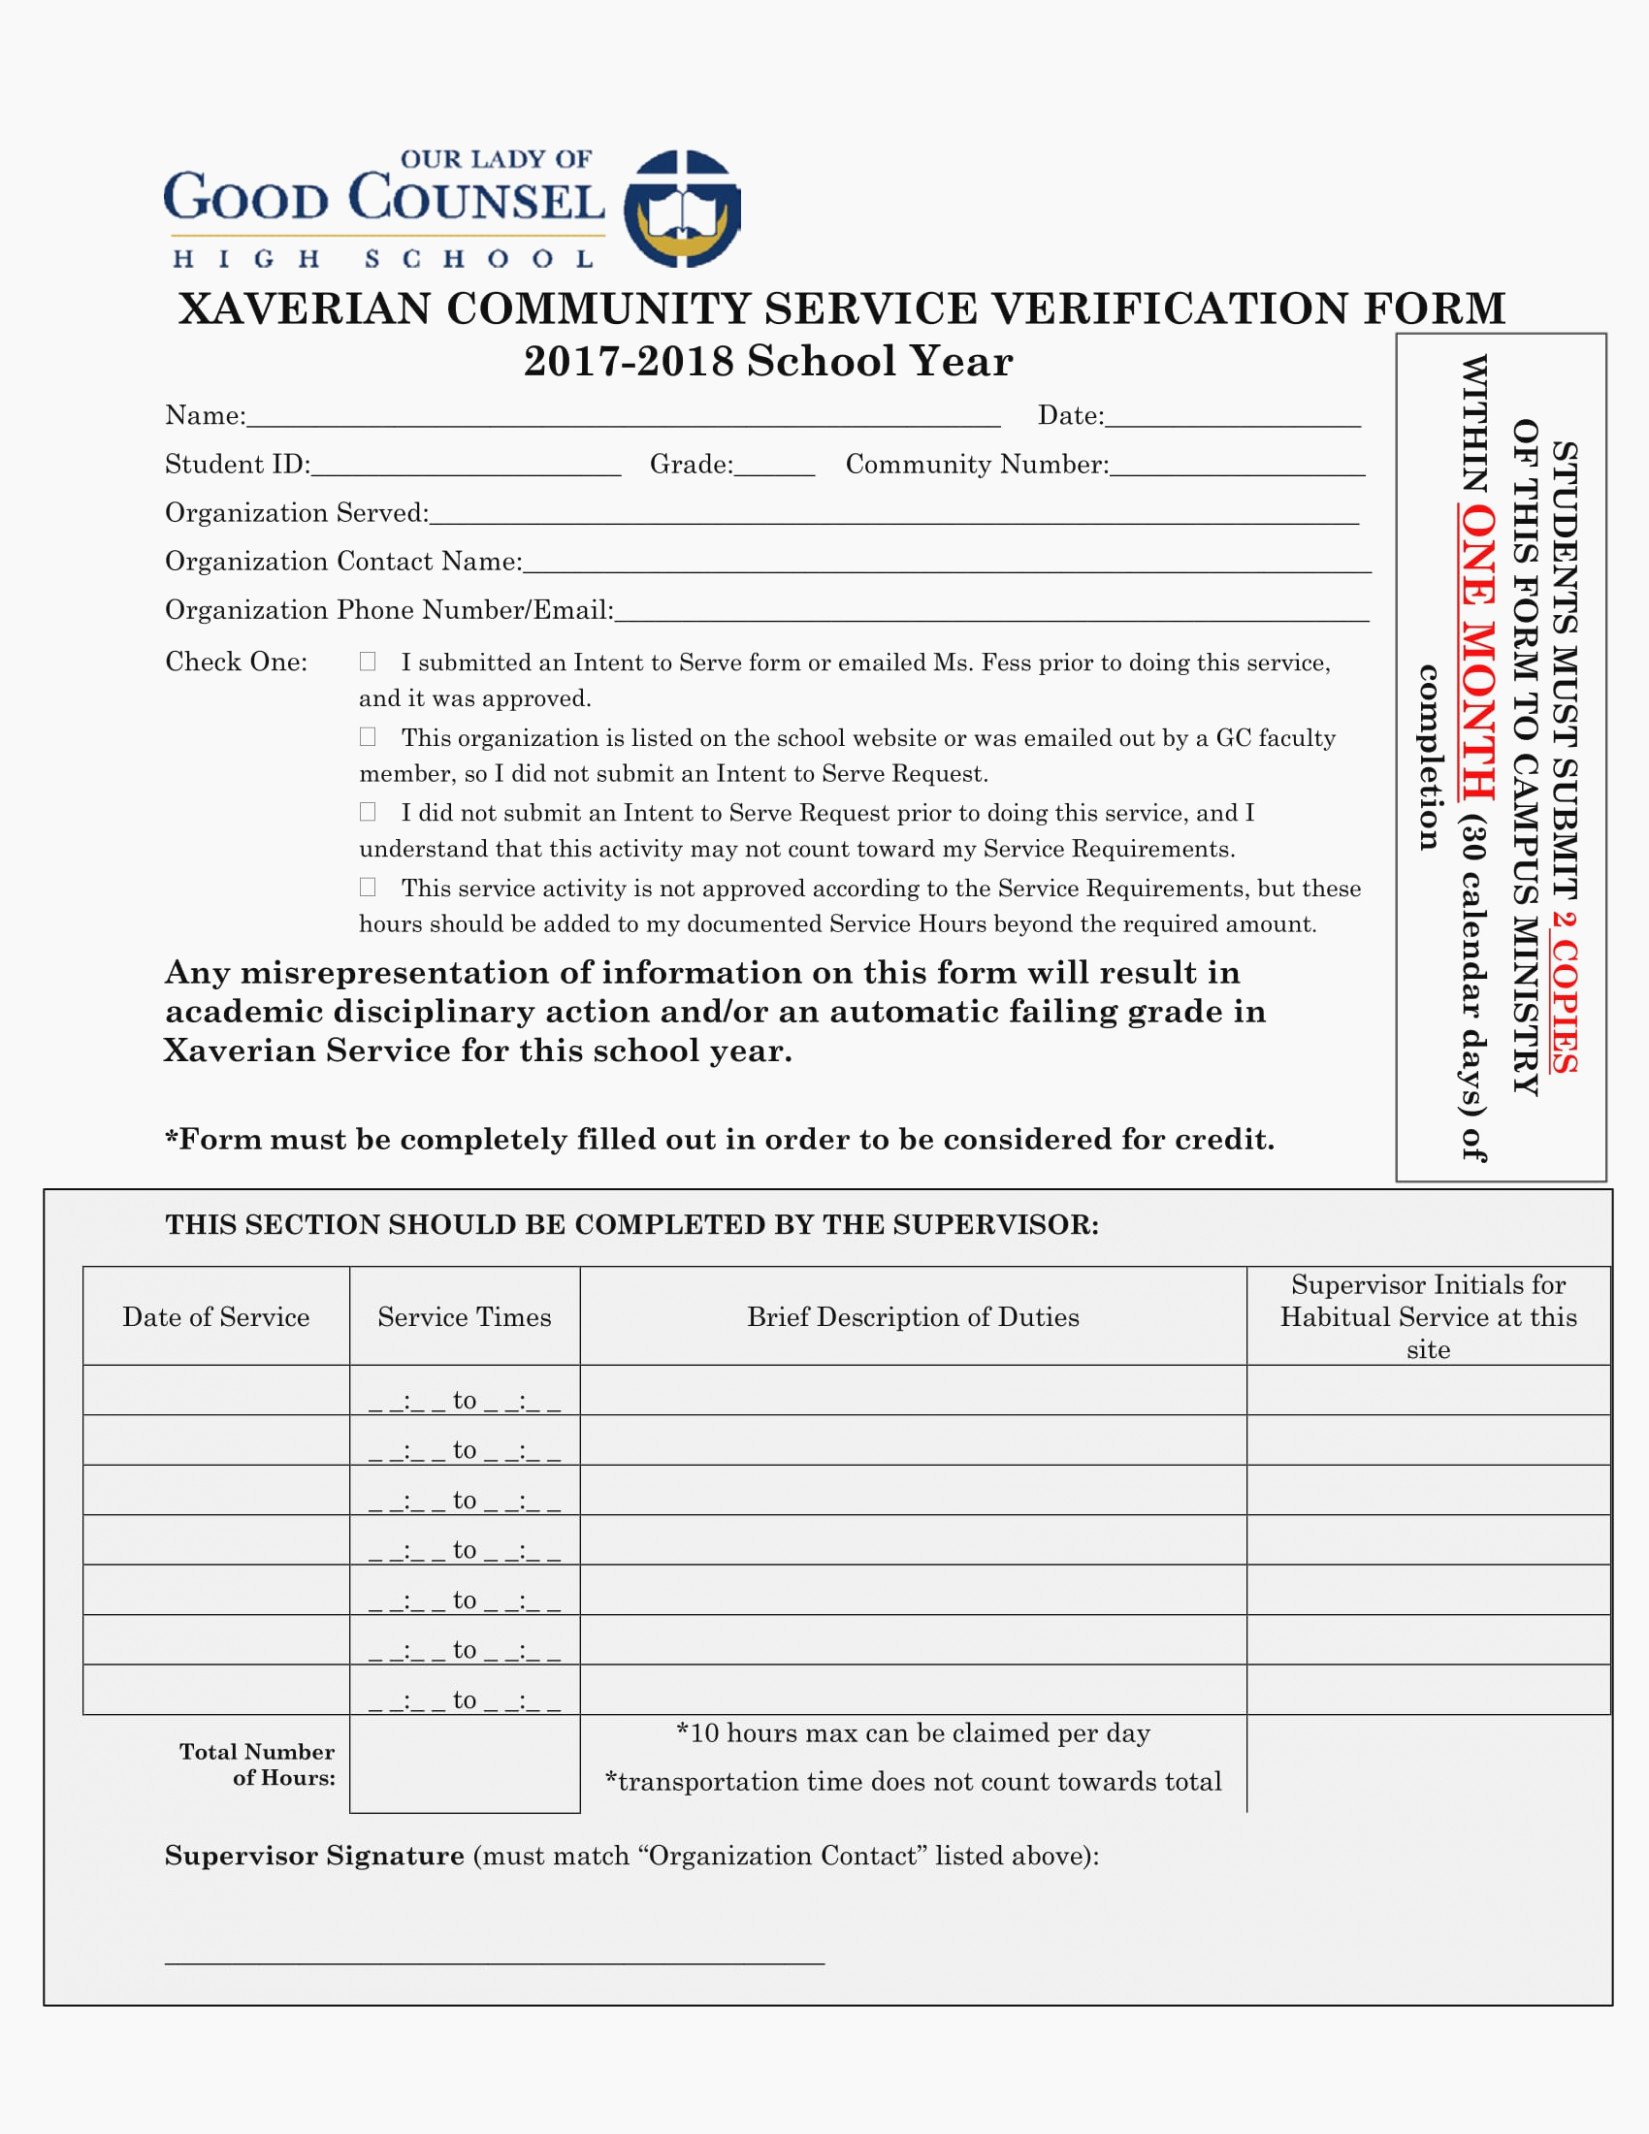 Community Service Verification form Template Beautiful Munity Service